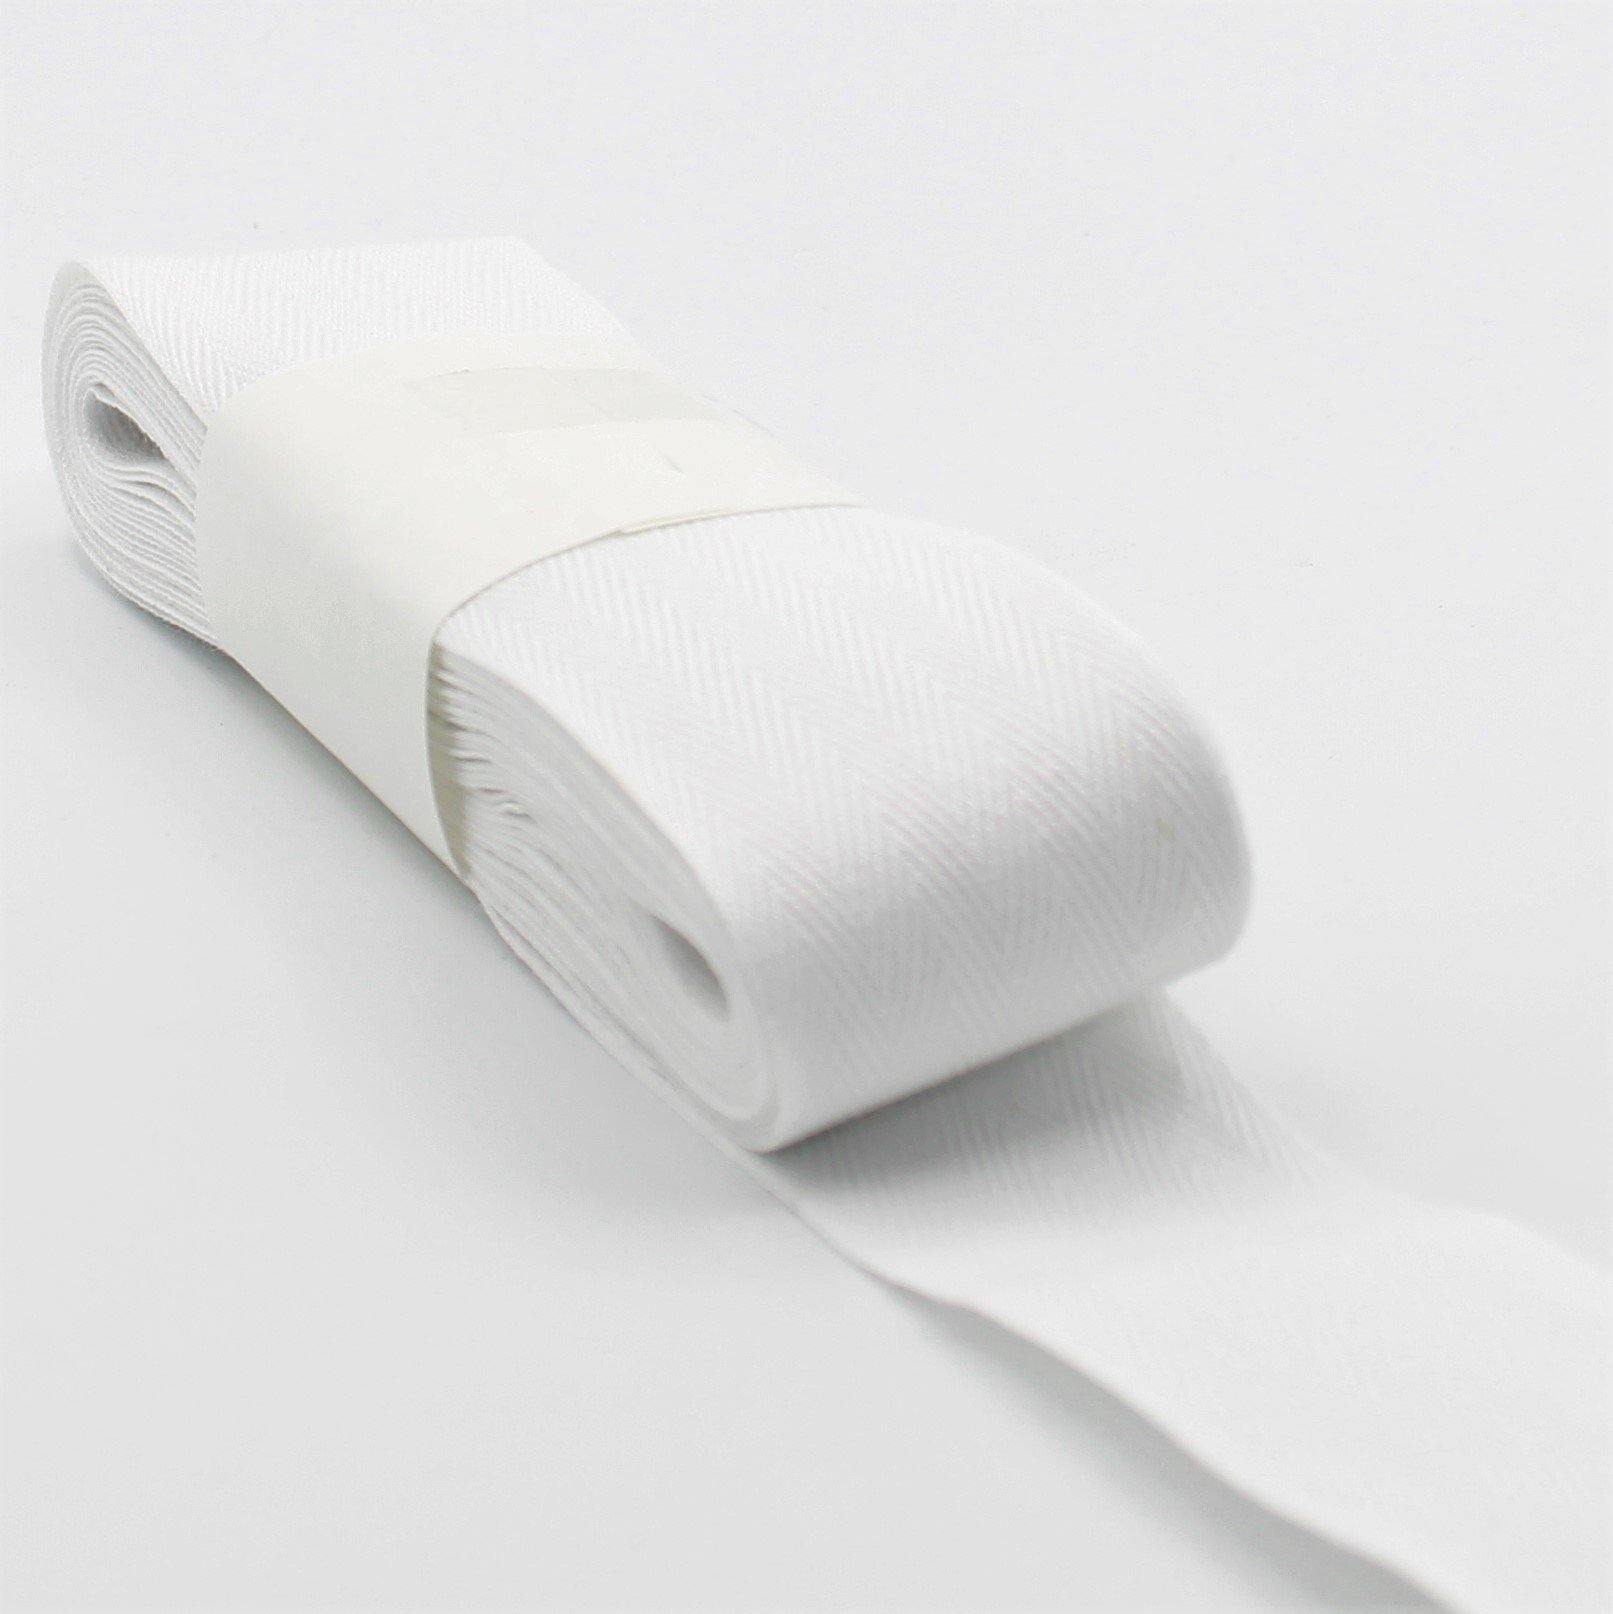 5 Meters Herringbone Tape 100% Cotton White Black or Ecru - ACCESSOIRES LEDUC